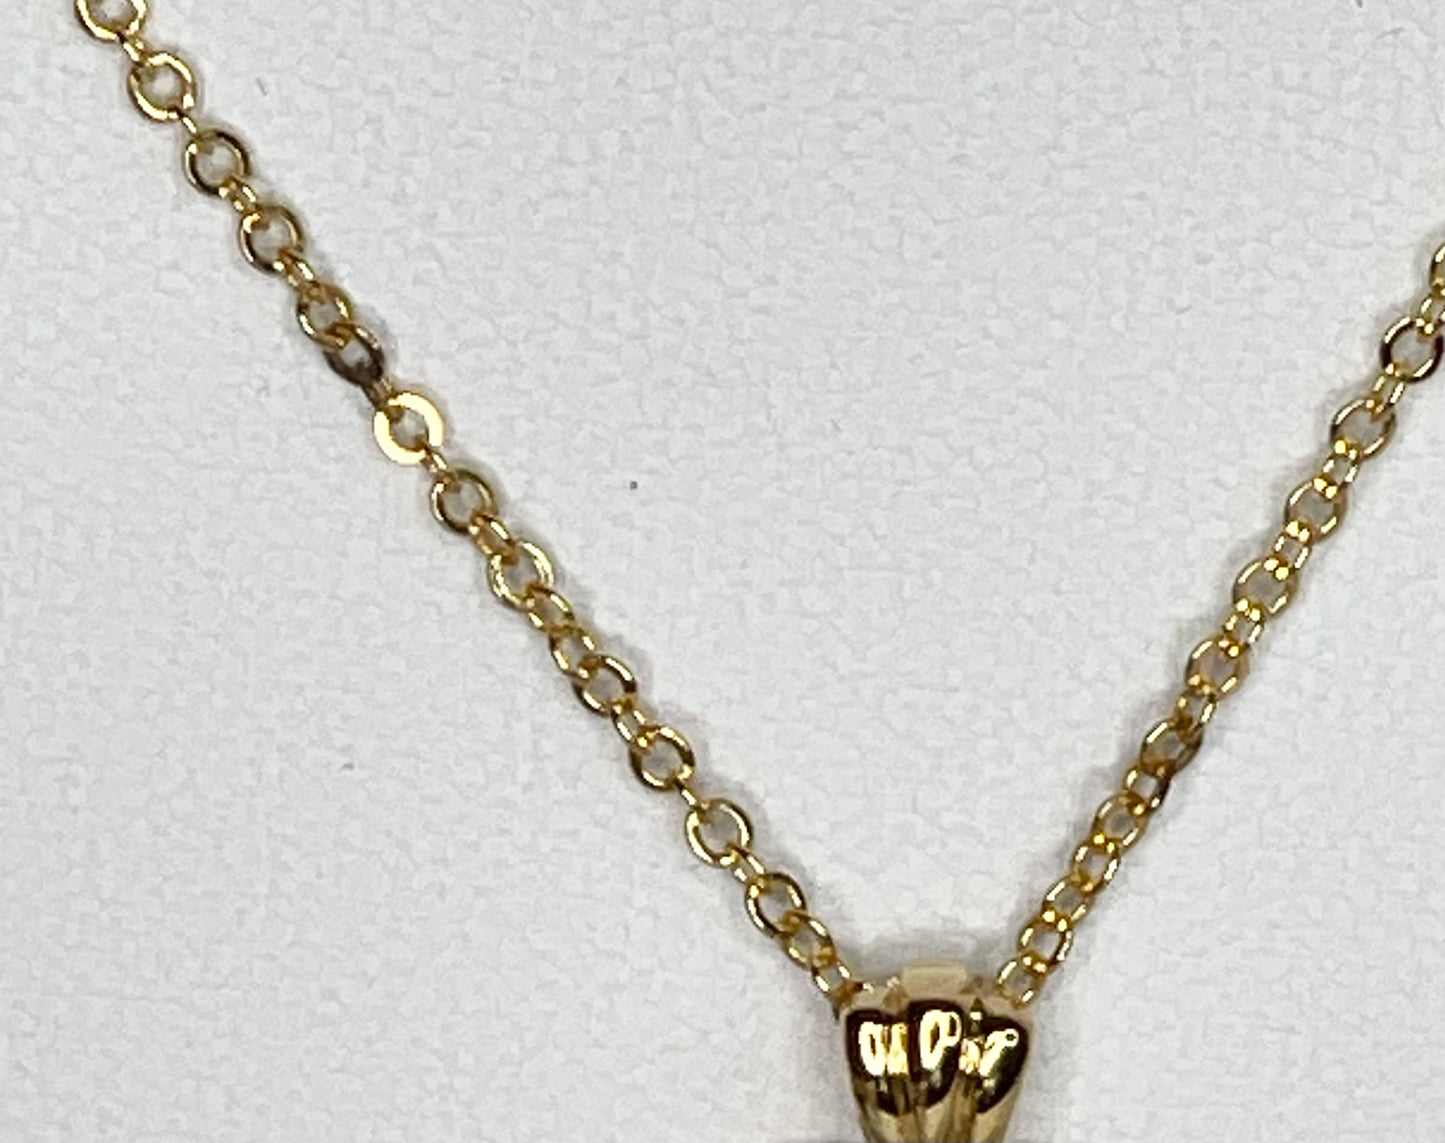 Angel Heart Rhinestone Pendant Necklace